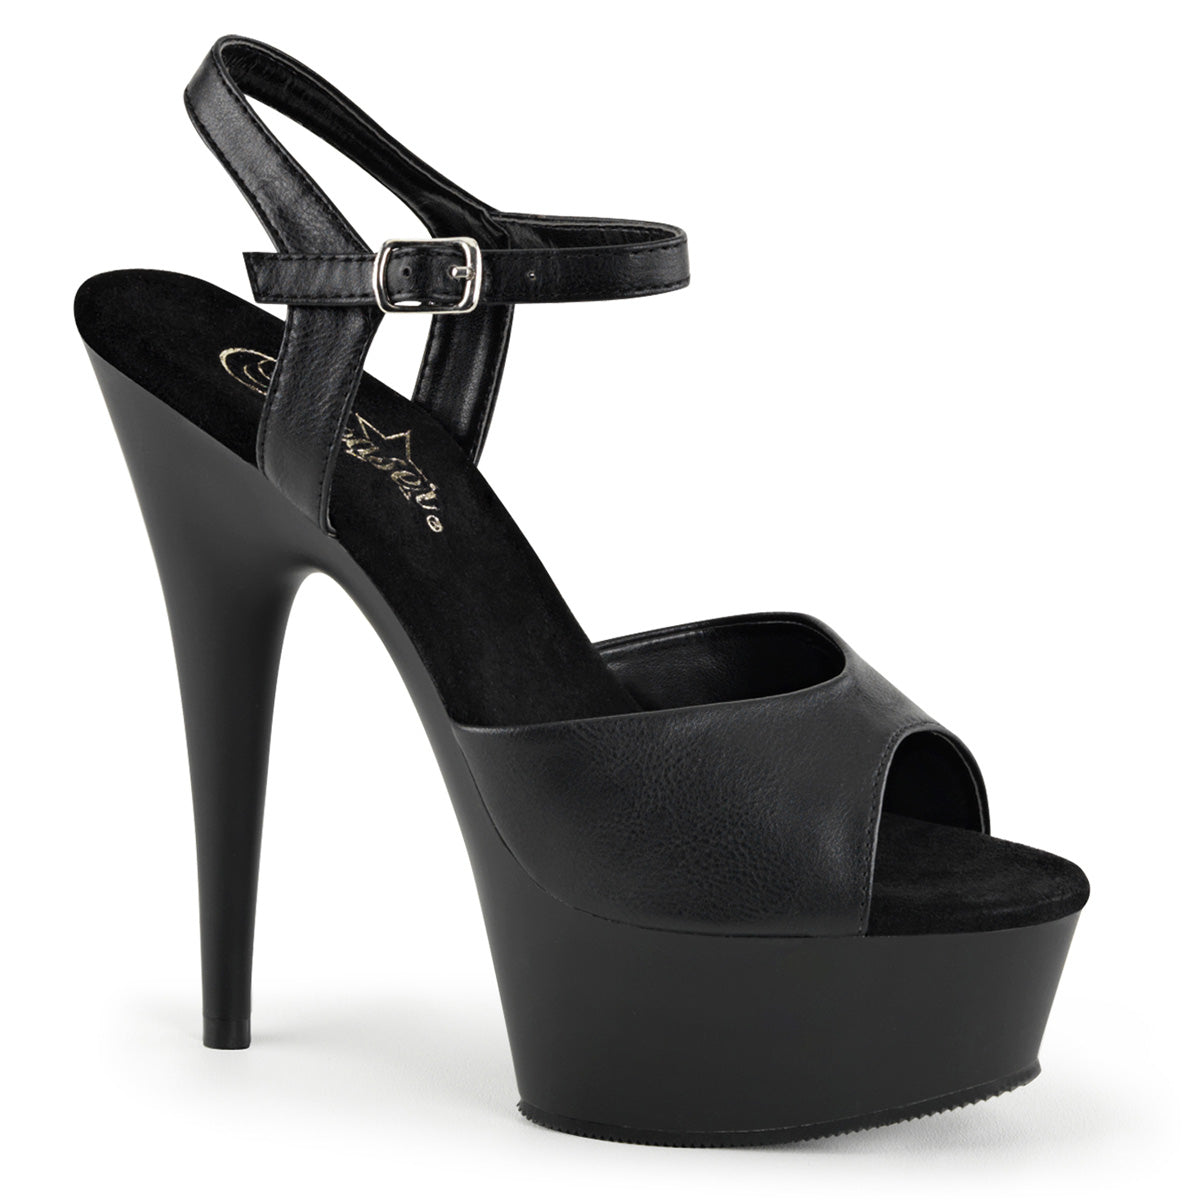 DELIGHT-609 Pleaser 6 Inch Heel Black Pole Dancing Platform-Pleaser- Sexy Shoes